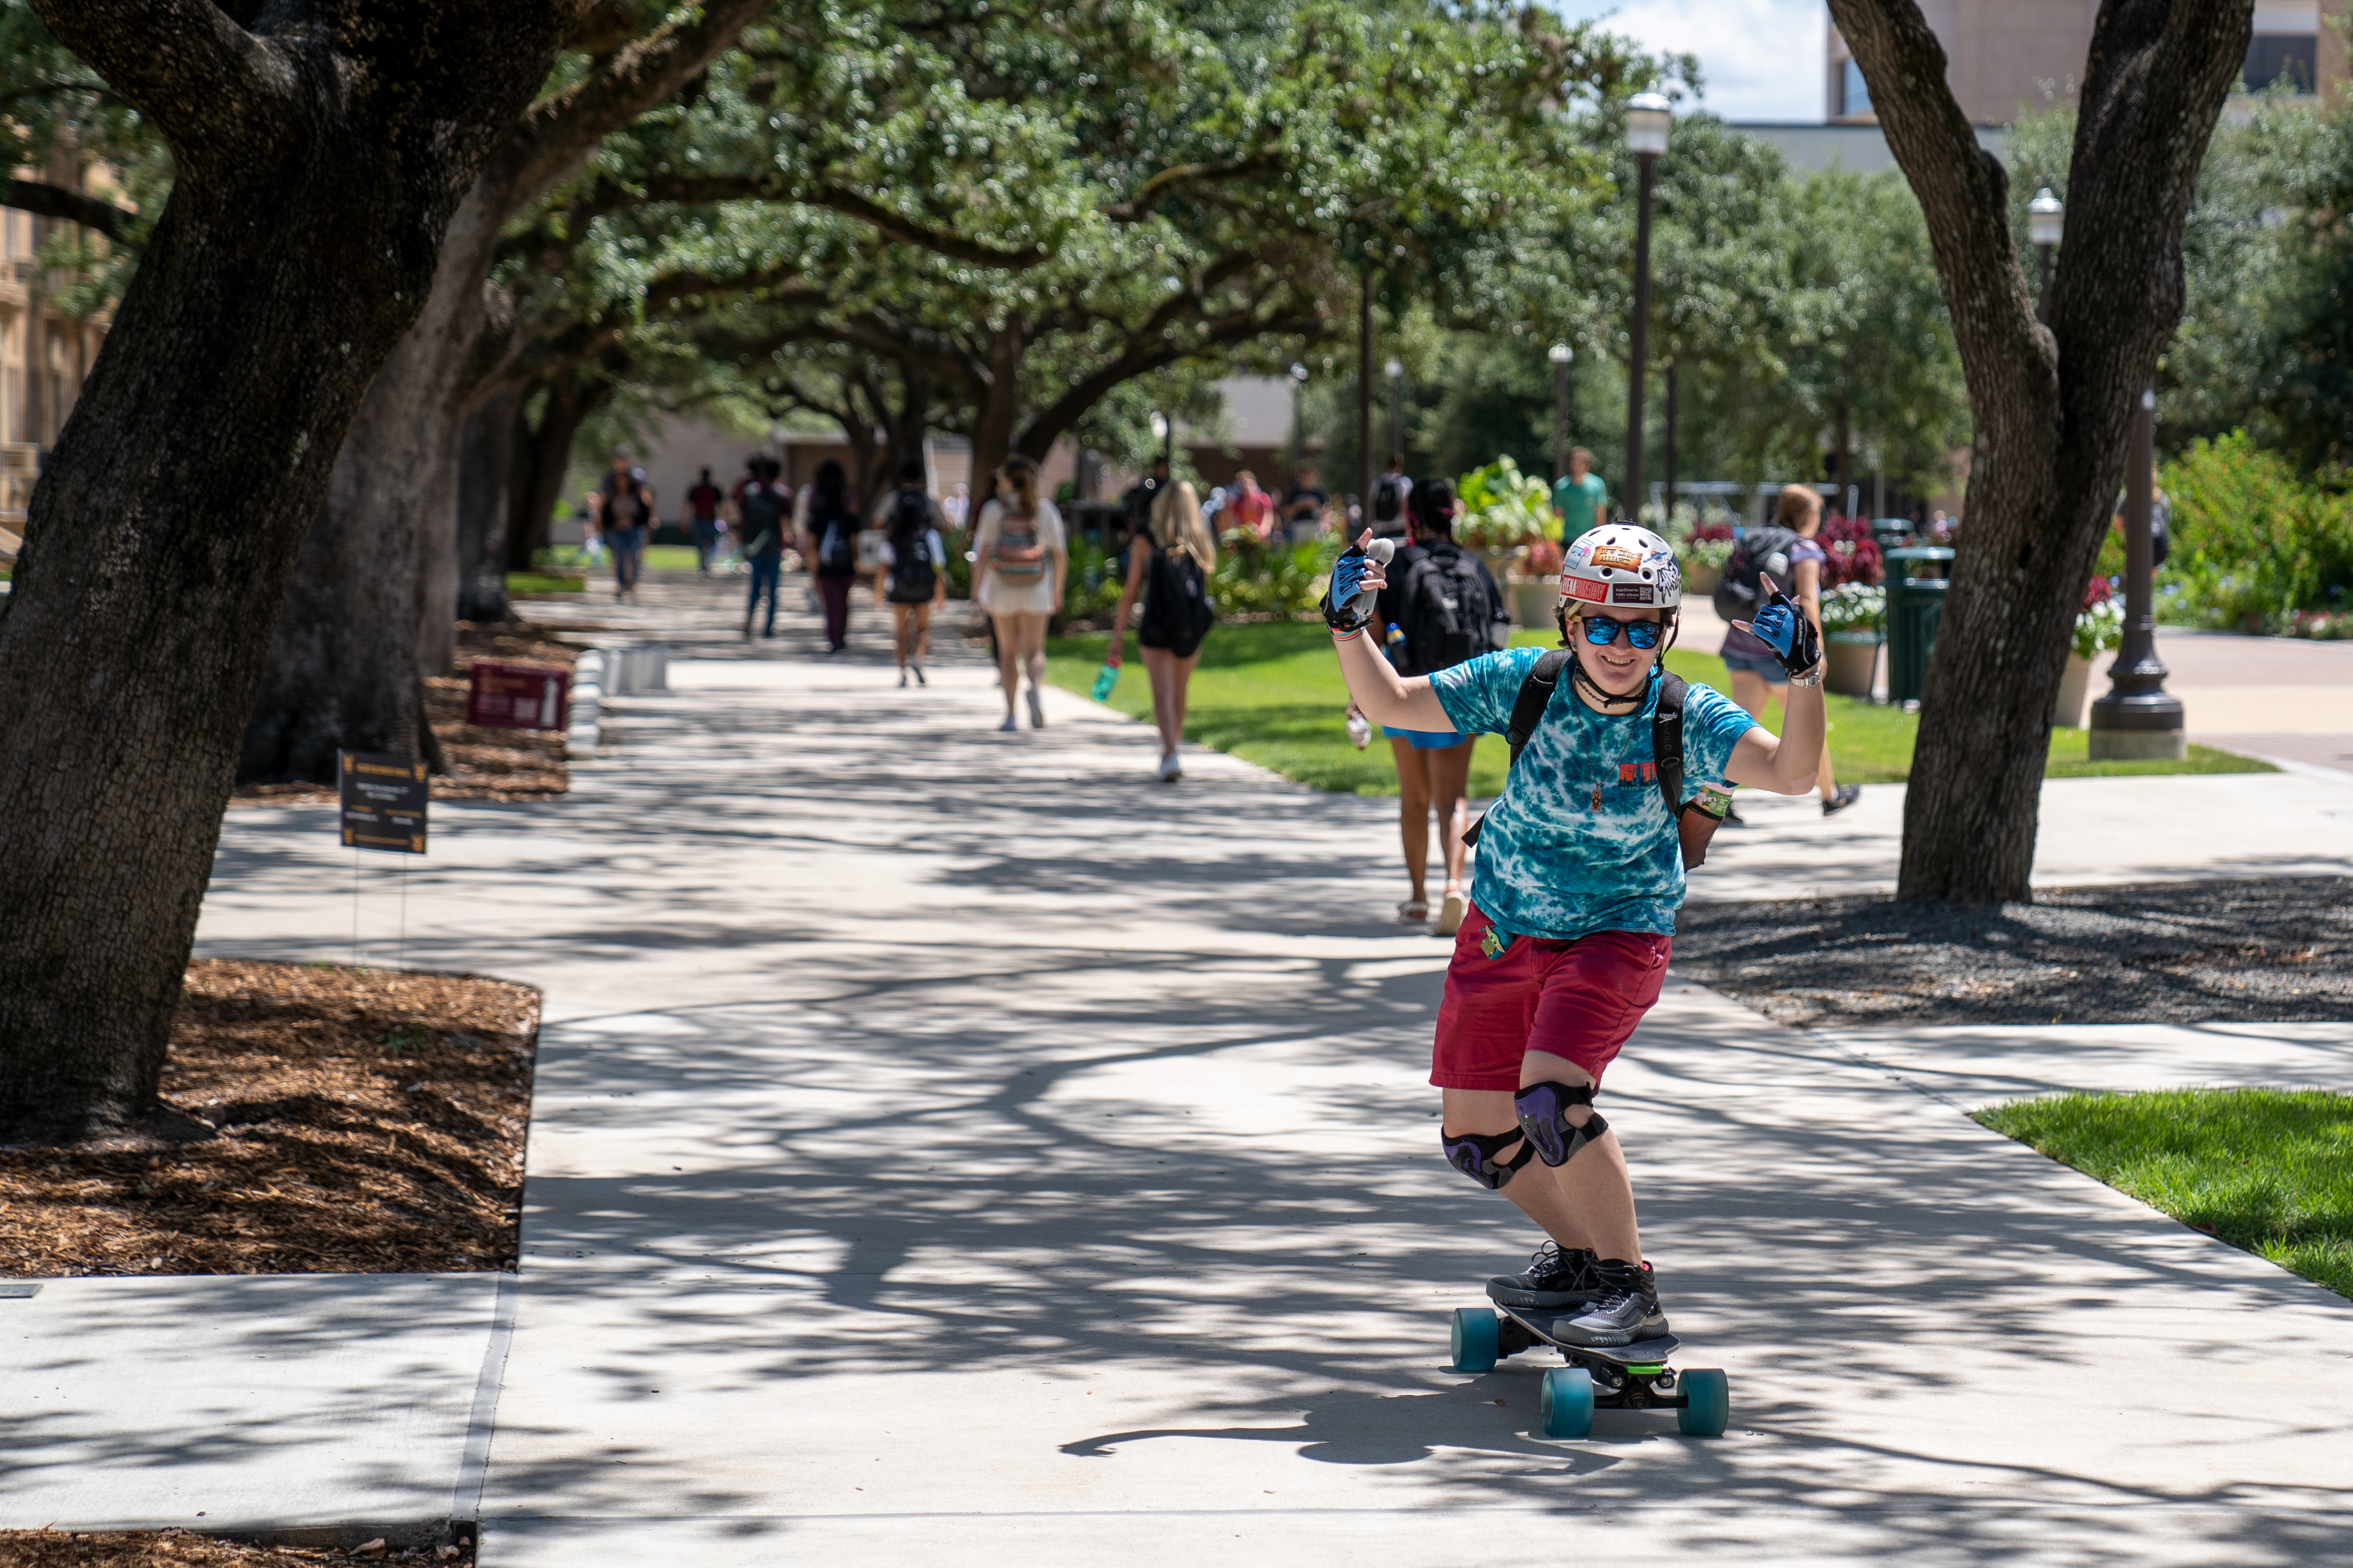 Student skateboarding on campus sidewalk